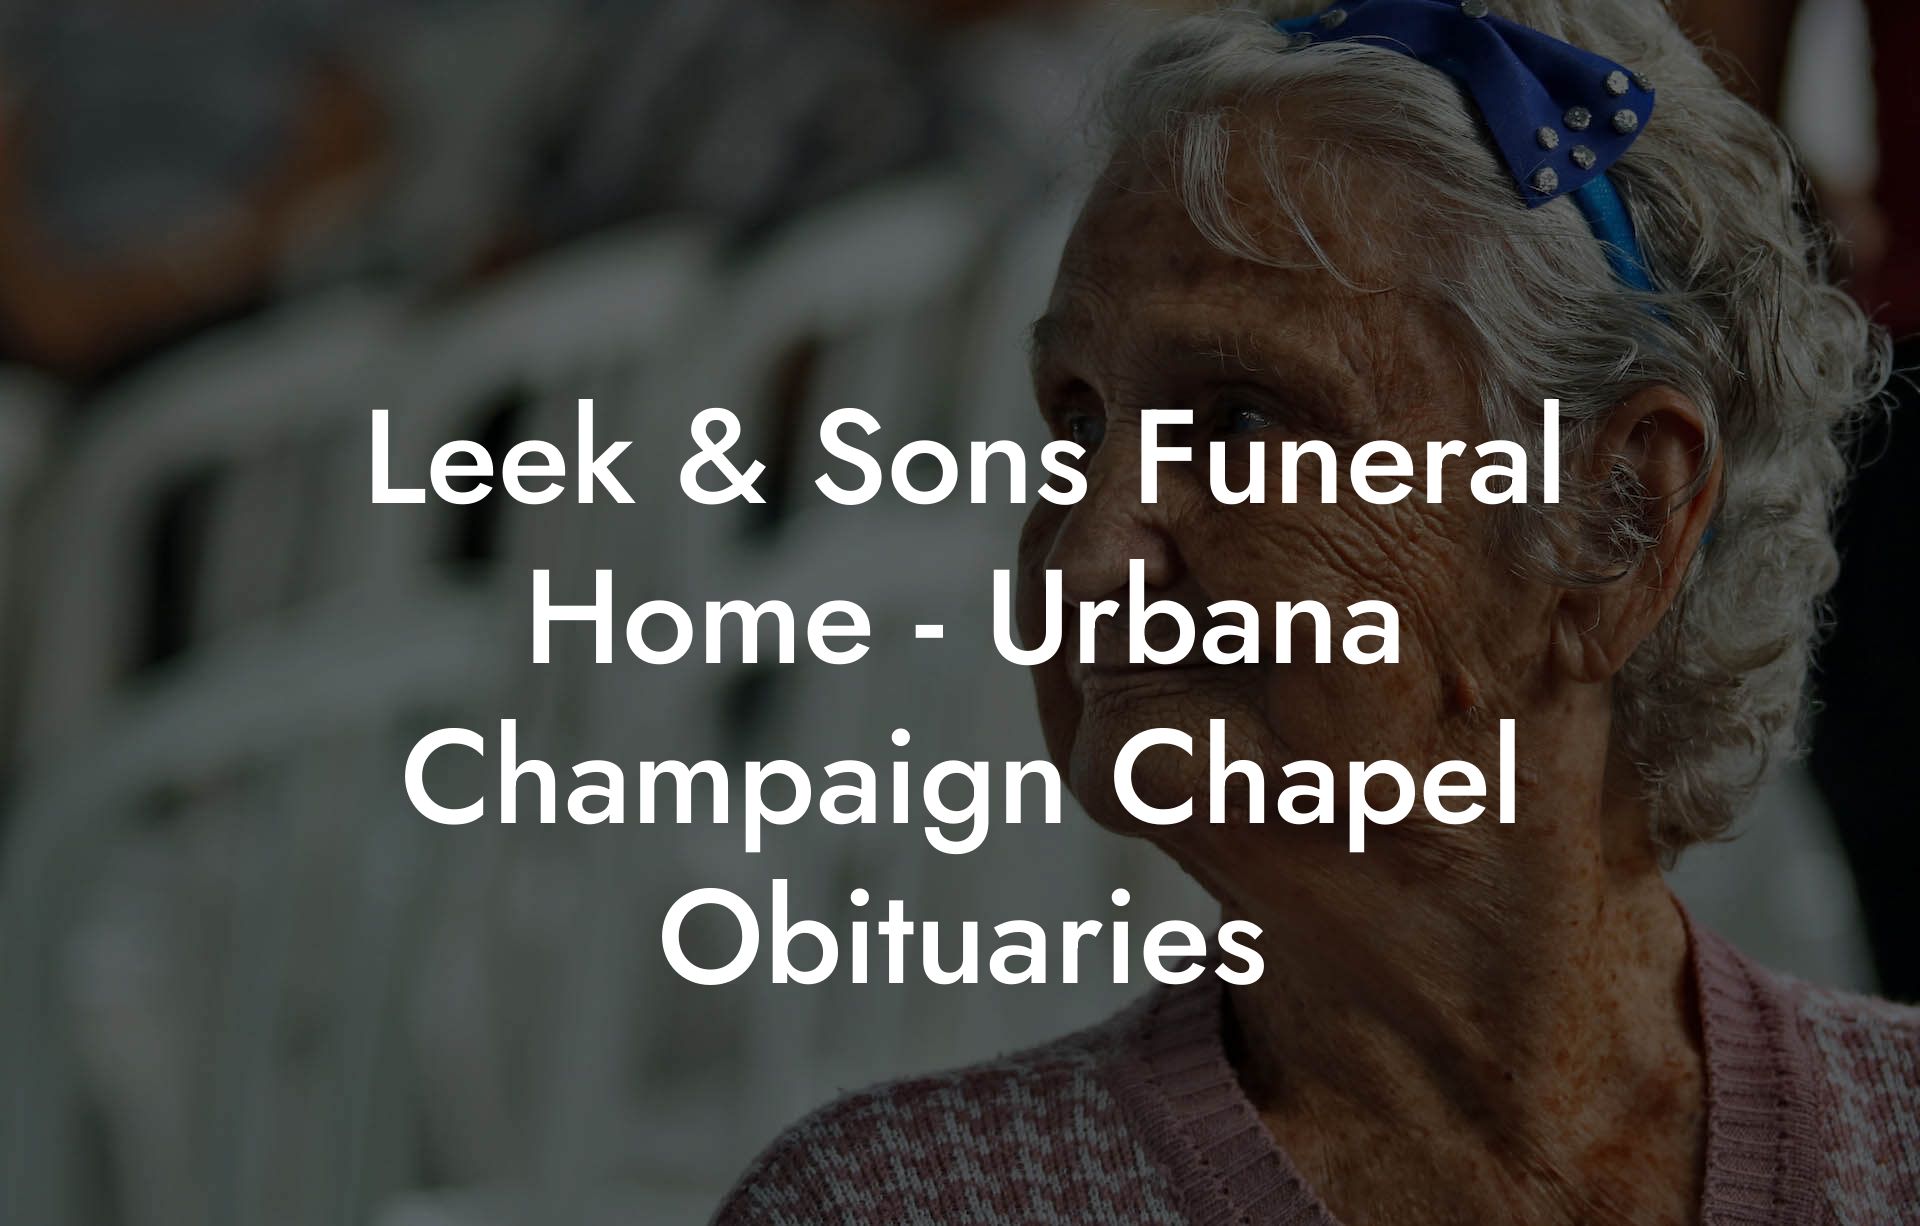 Leek & Sons Funeral Home - Urbana Champaign Chapel Obituaries